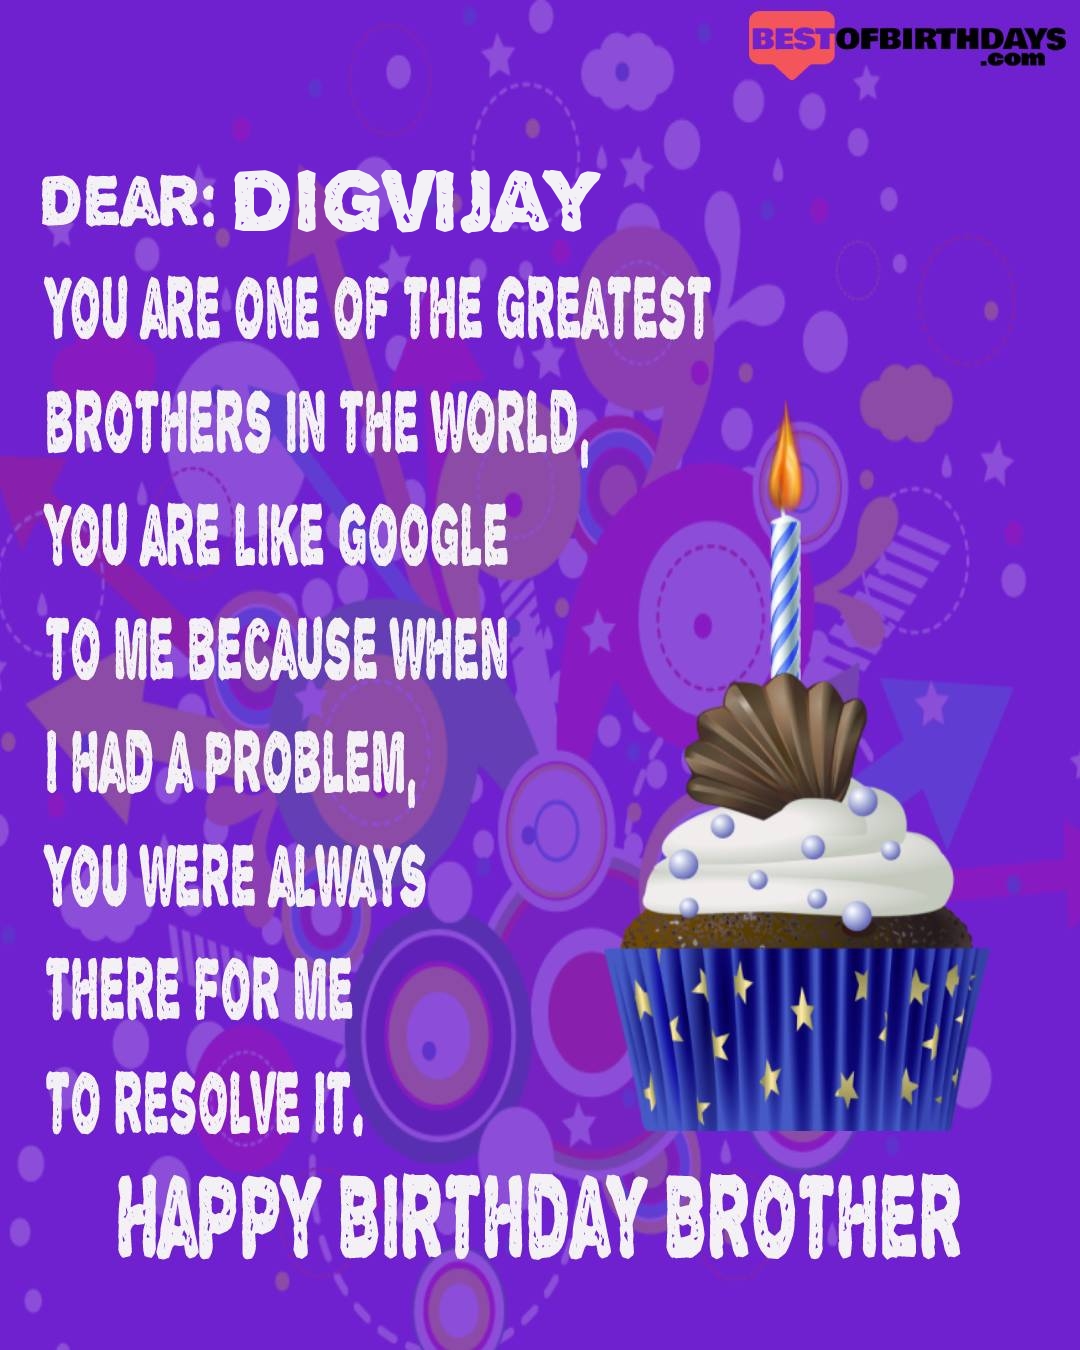 Happy birthday digvijay bhai brother bro